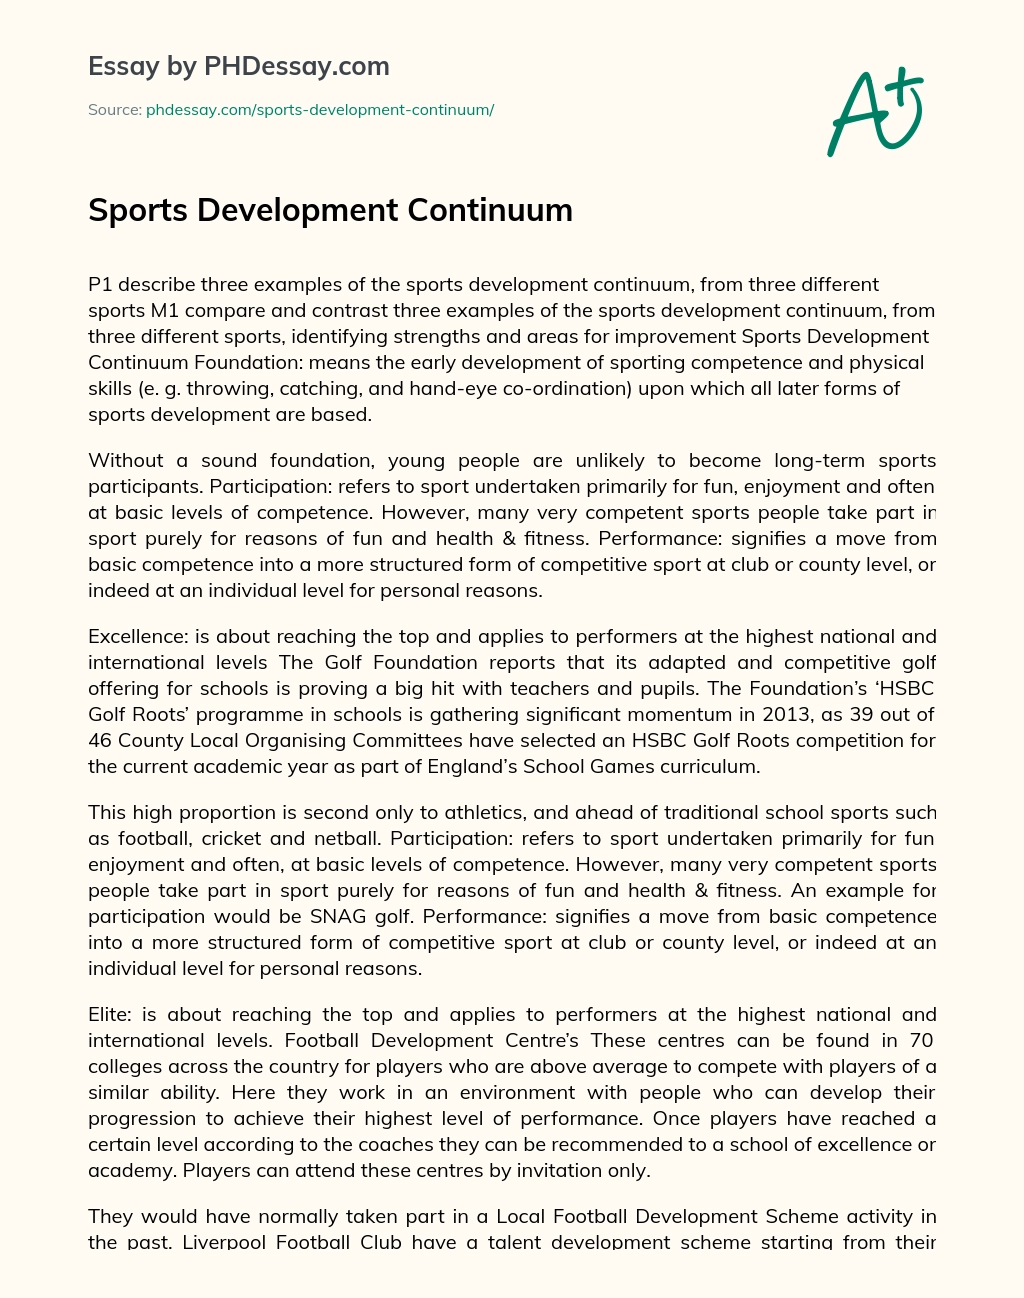 Sports Development Continuum essay